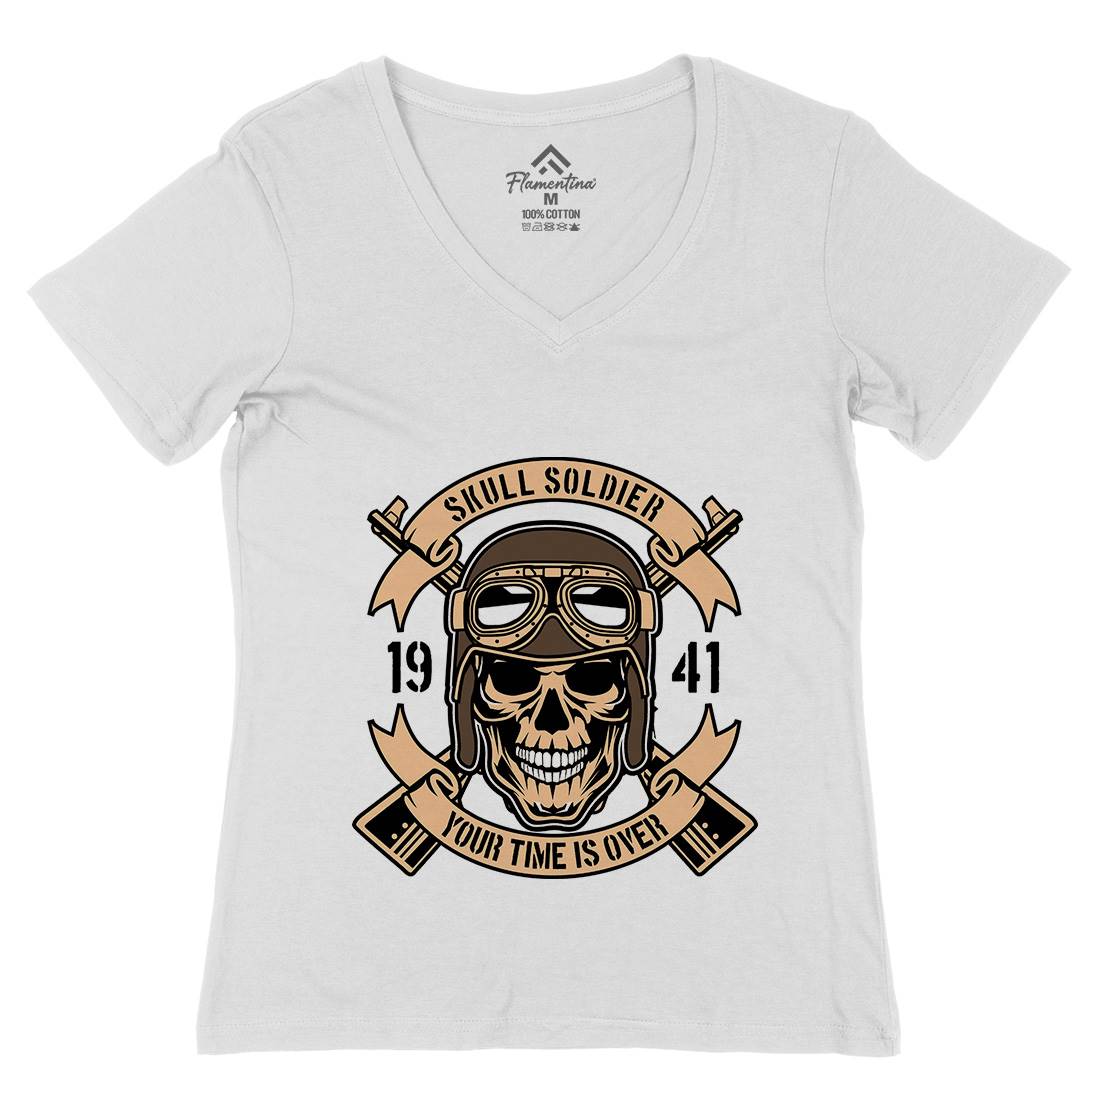 Skull Soldier Womens Organic V-Neck T-Shirt Army D579